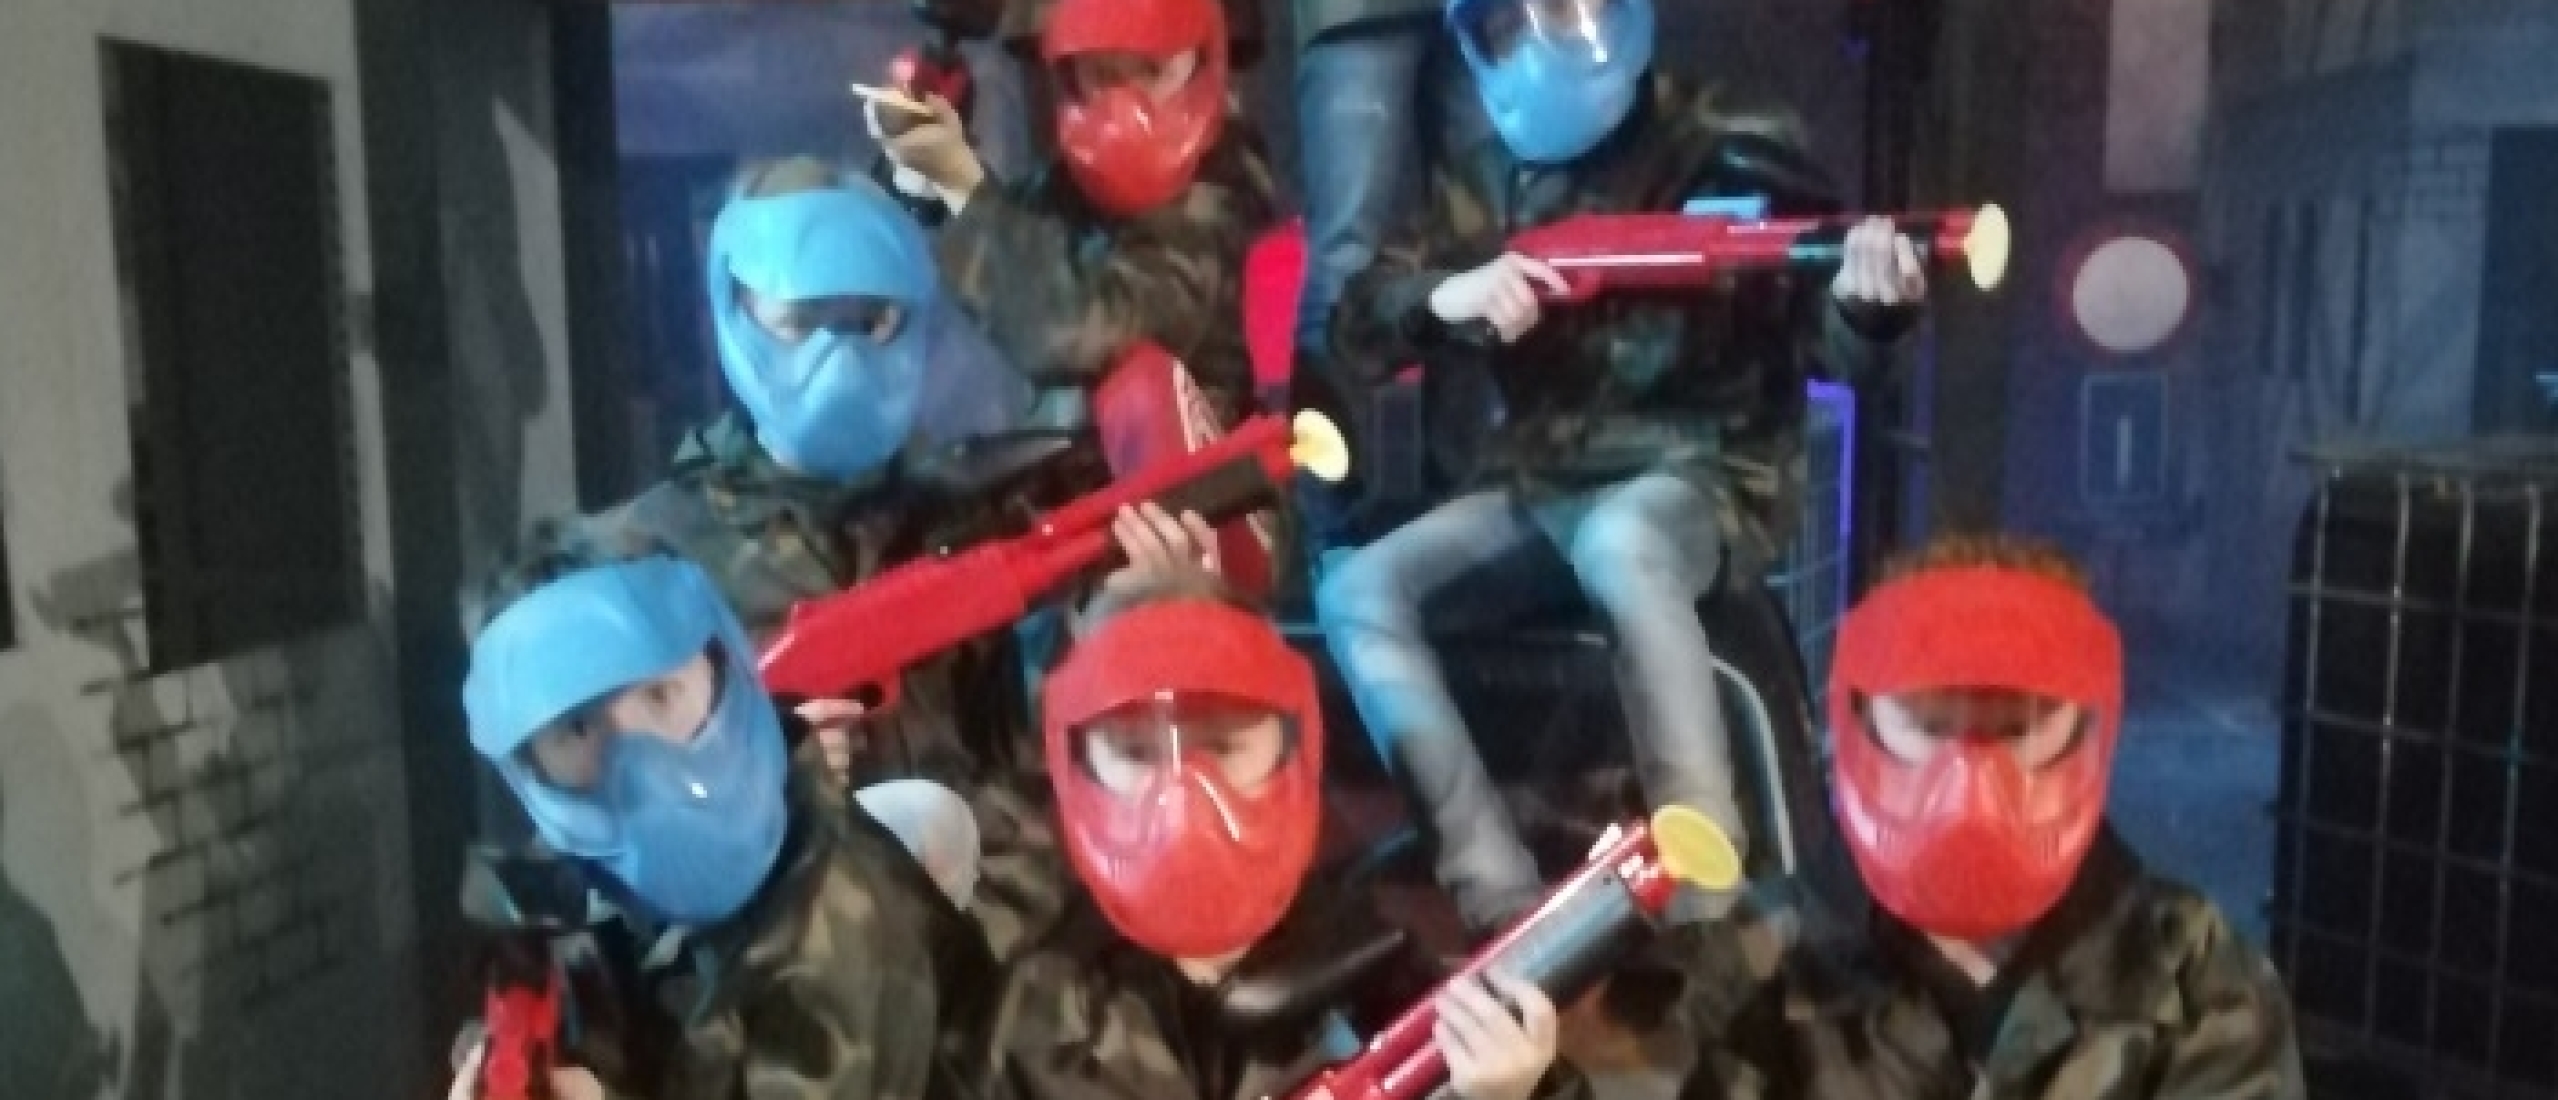 Het ultieme kinderfeestje in Drenthe: KinderPaintball